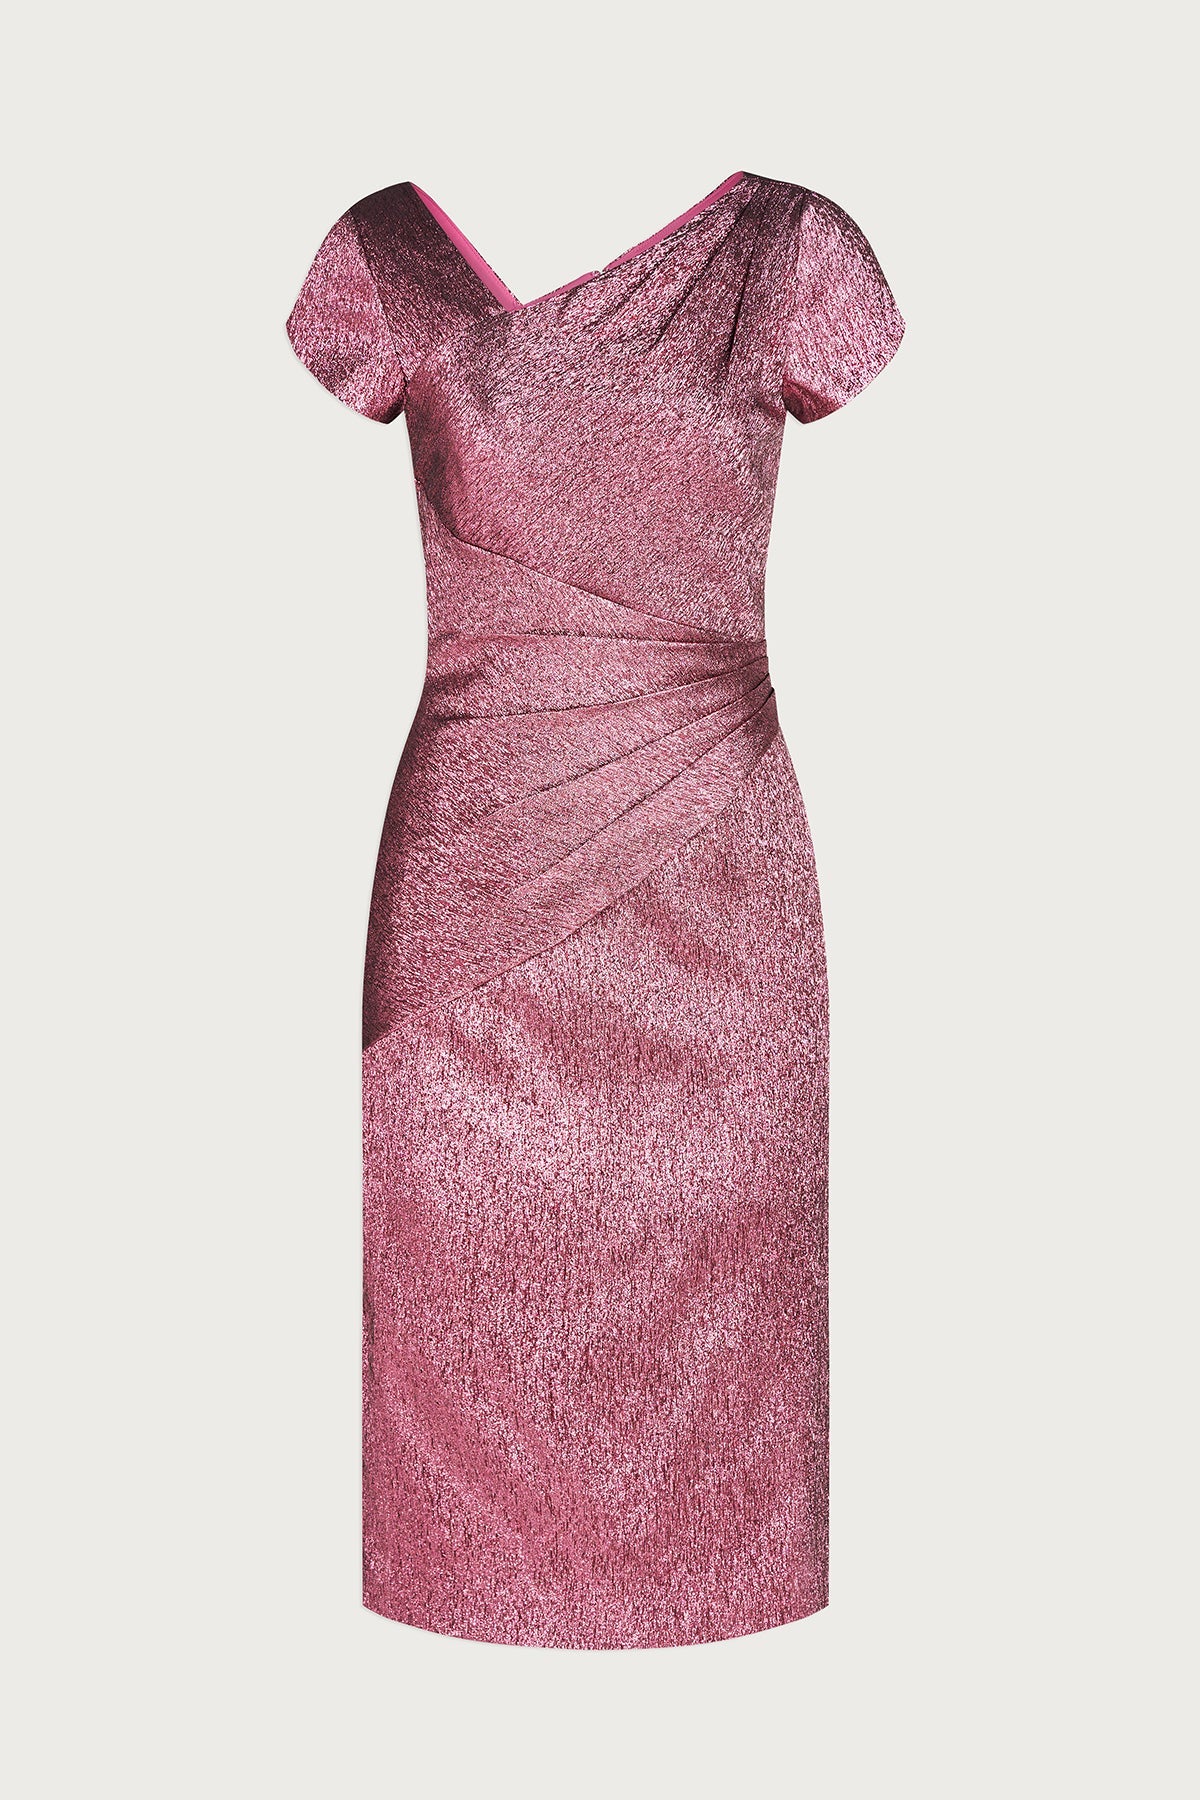 ROSE ASYMMETRIC COCKTAIL DRESS - Camellia